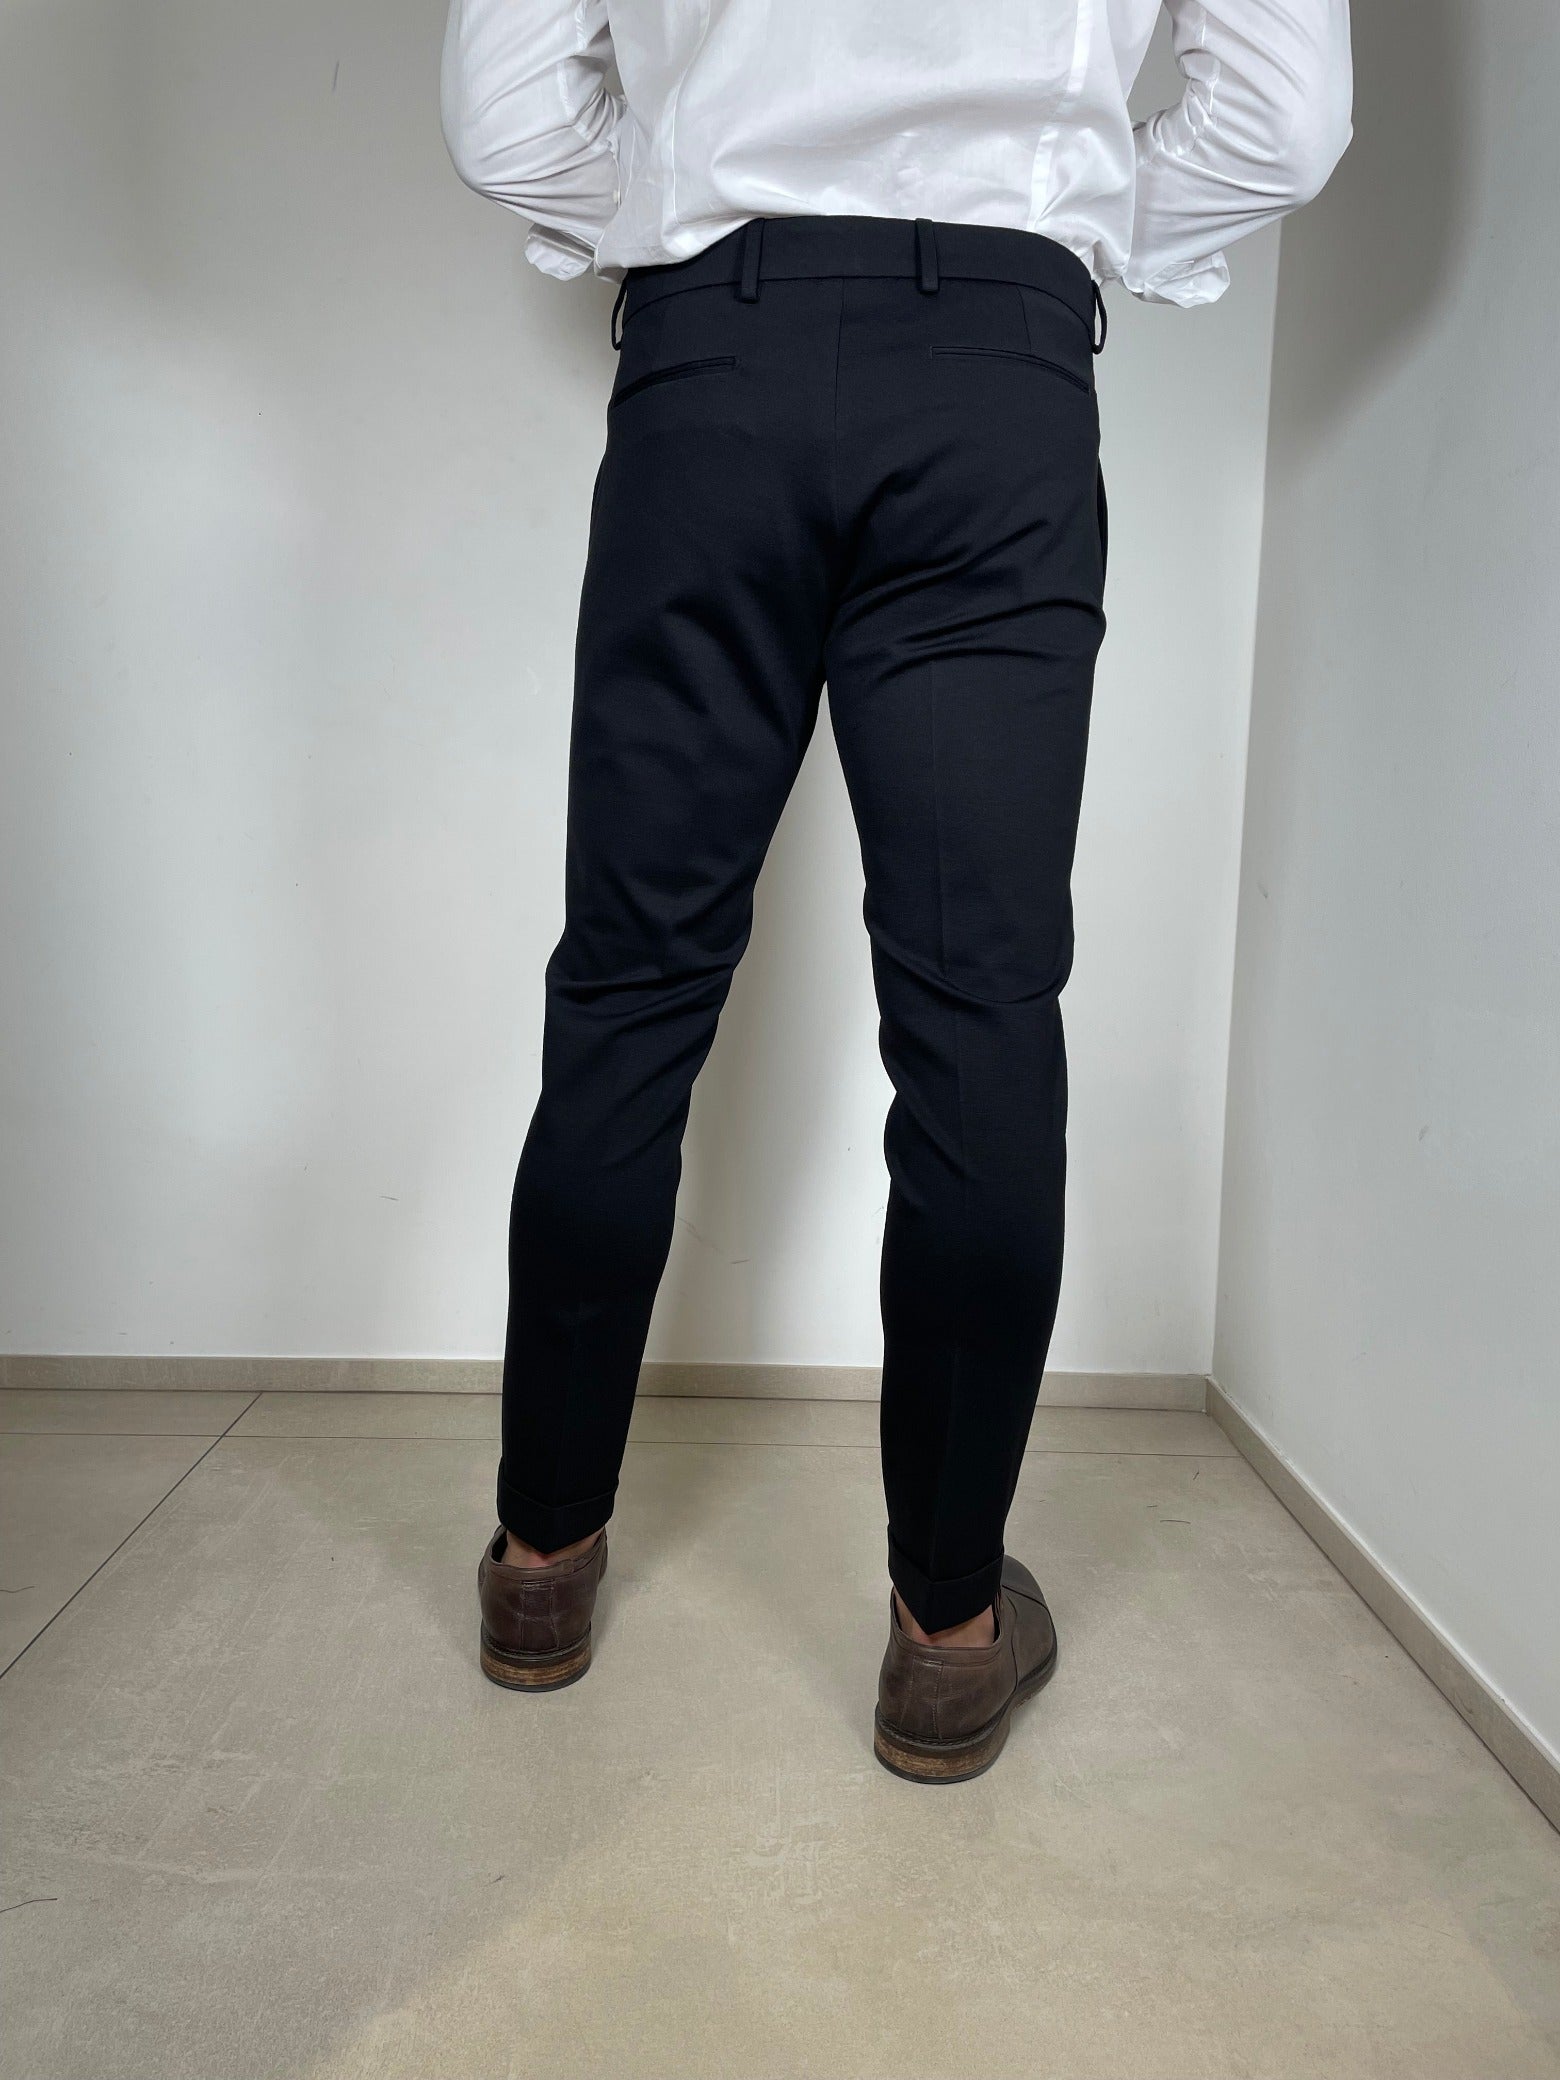 Tom Merritt Pantalone Modello BYRON/103